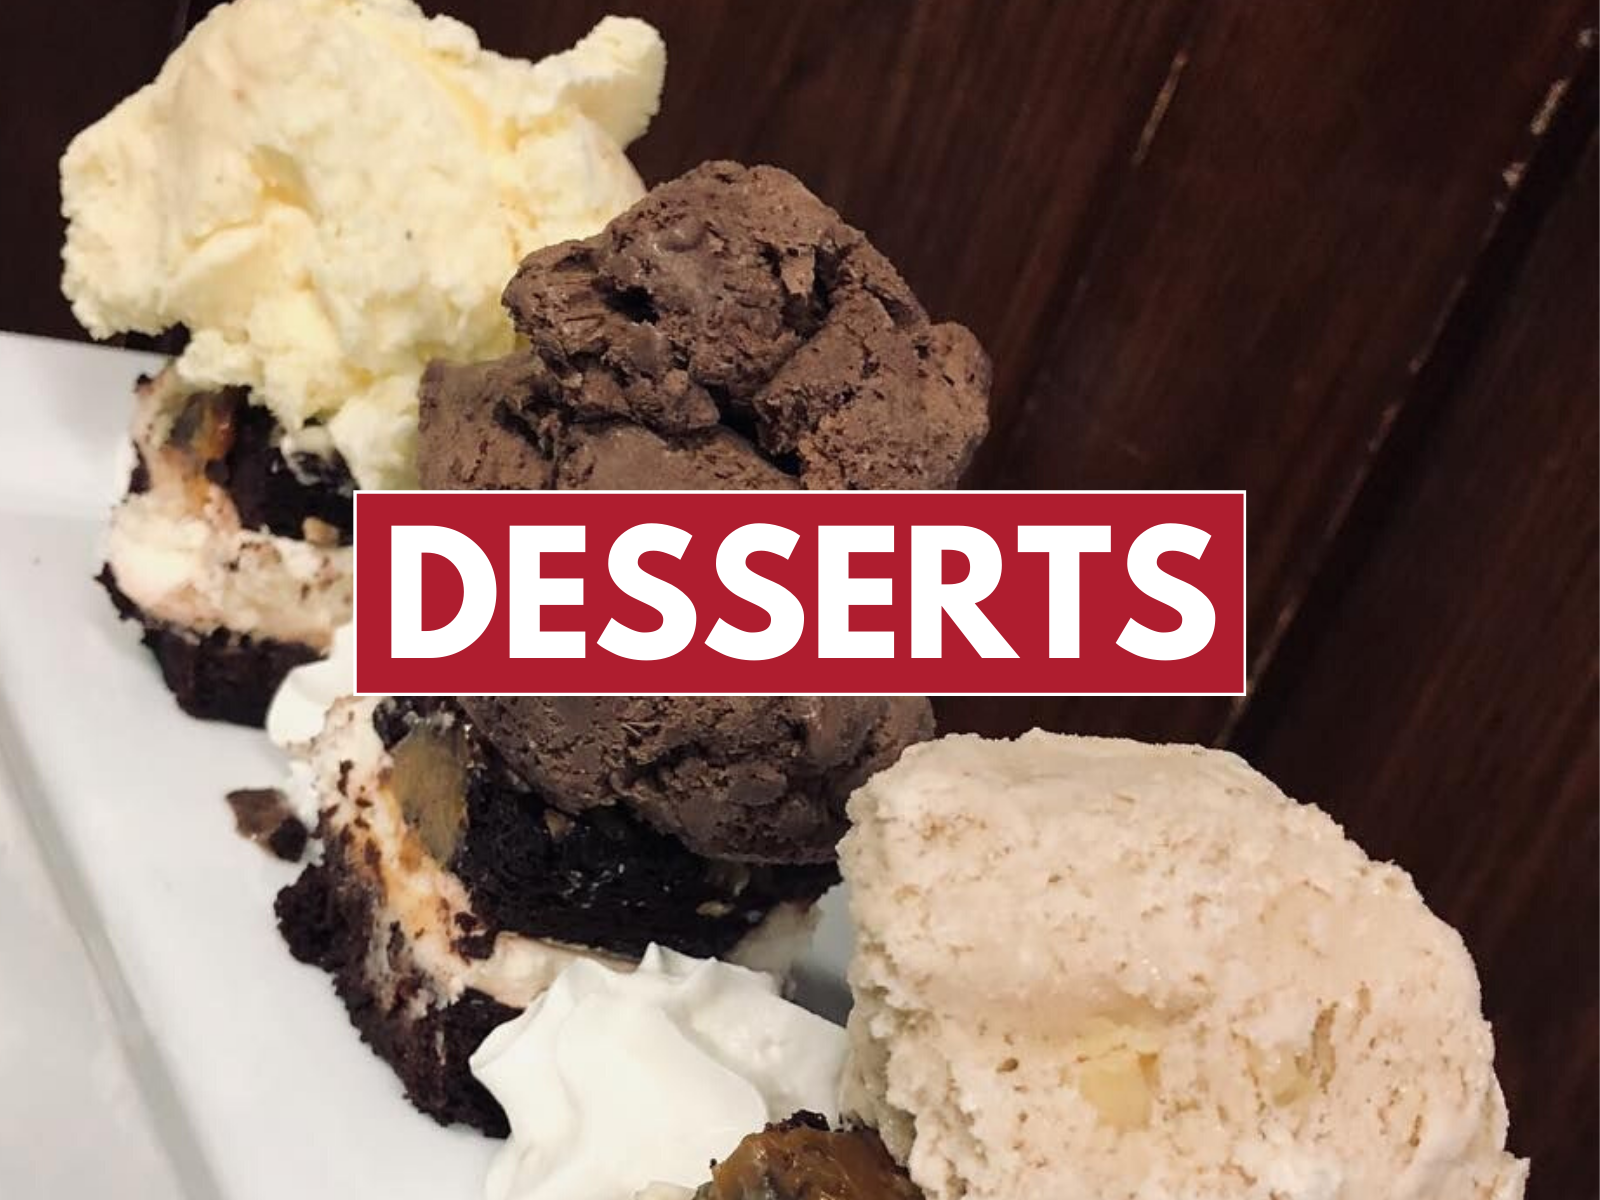 Desserts - Menu - Thumbnail